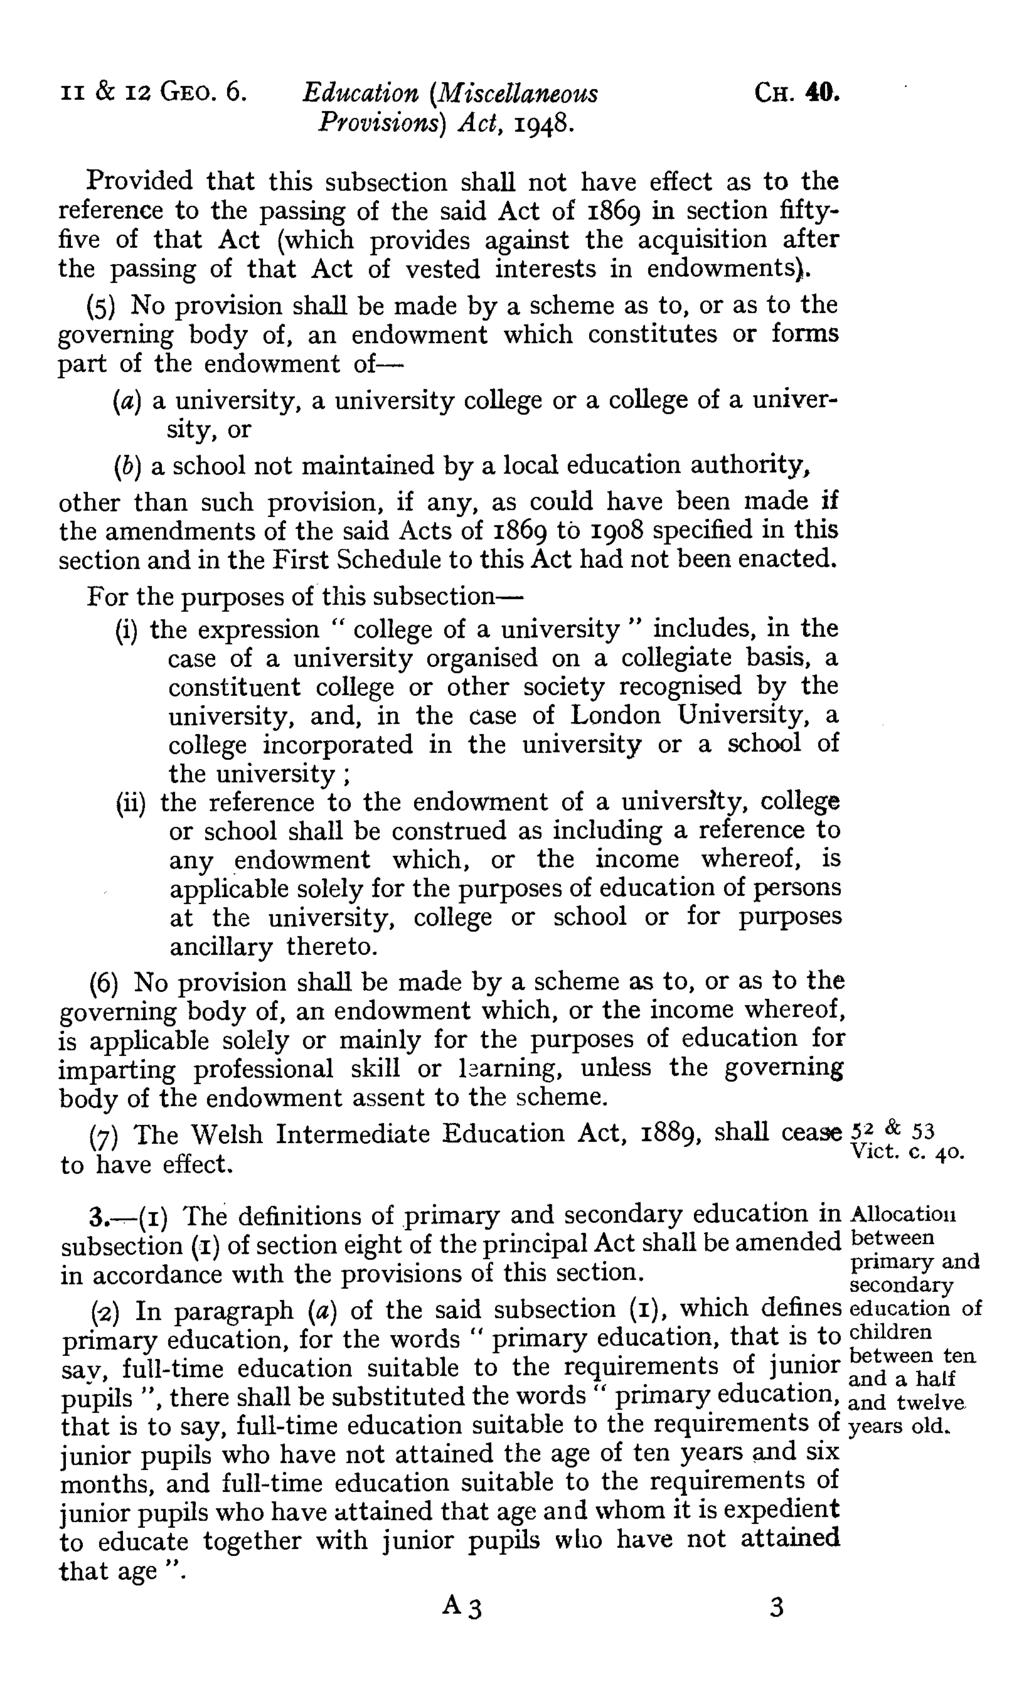 ii & 12 GEO. 6. Education (Miscellaneous CH. 40.